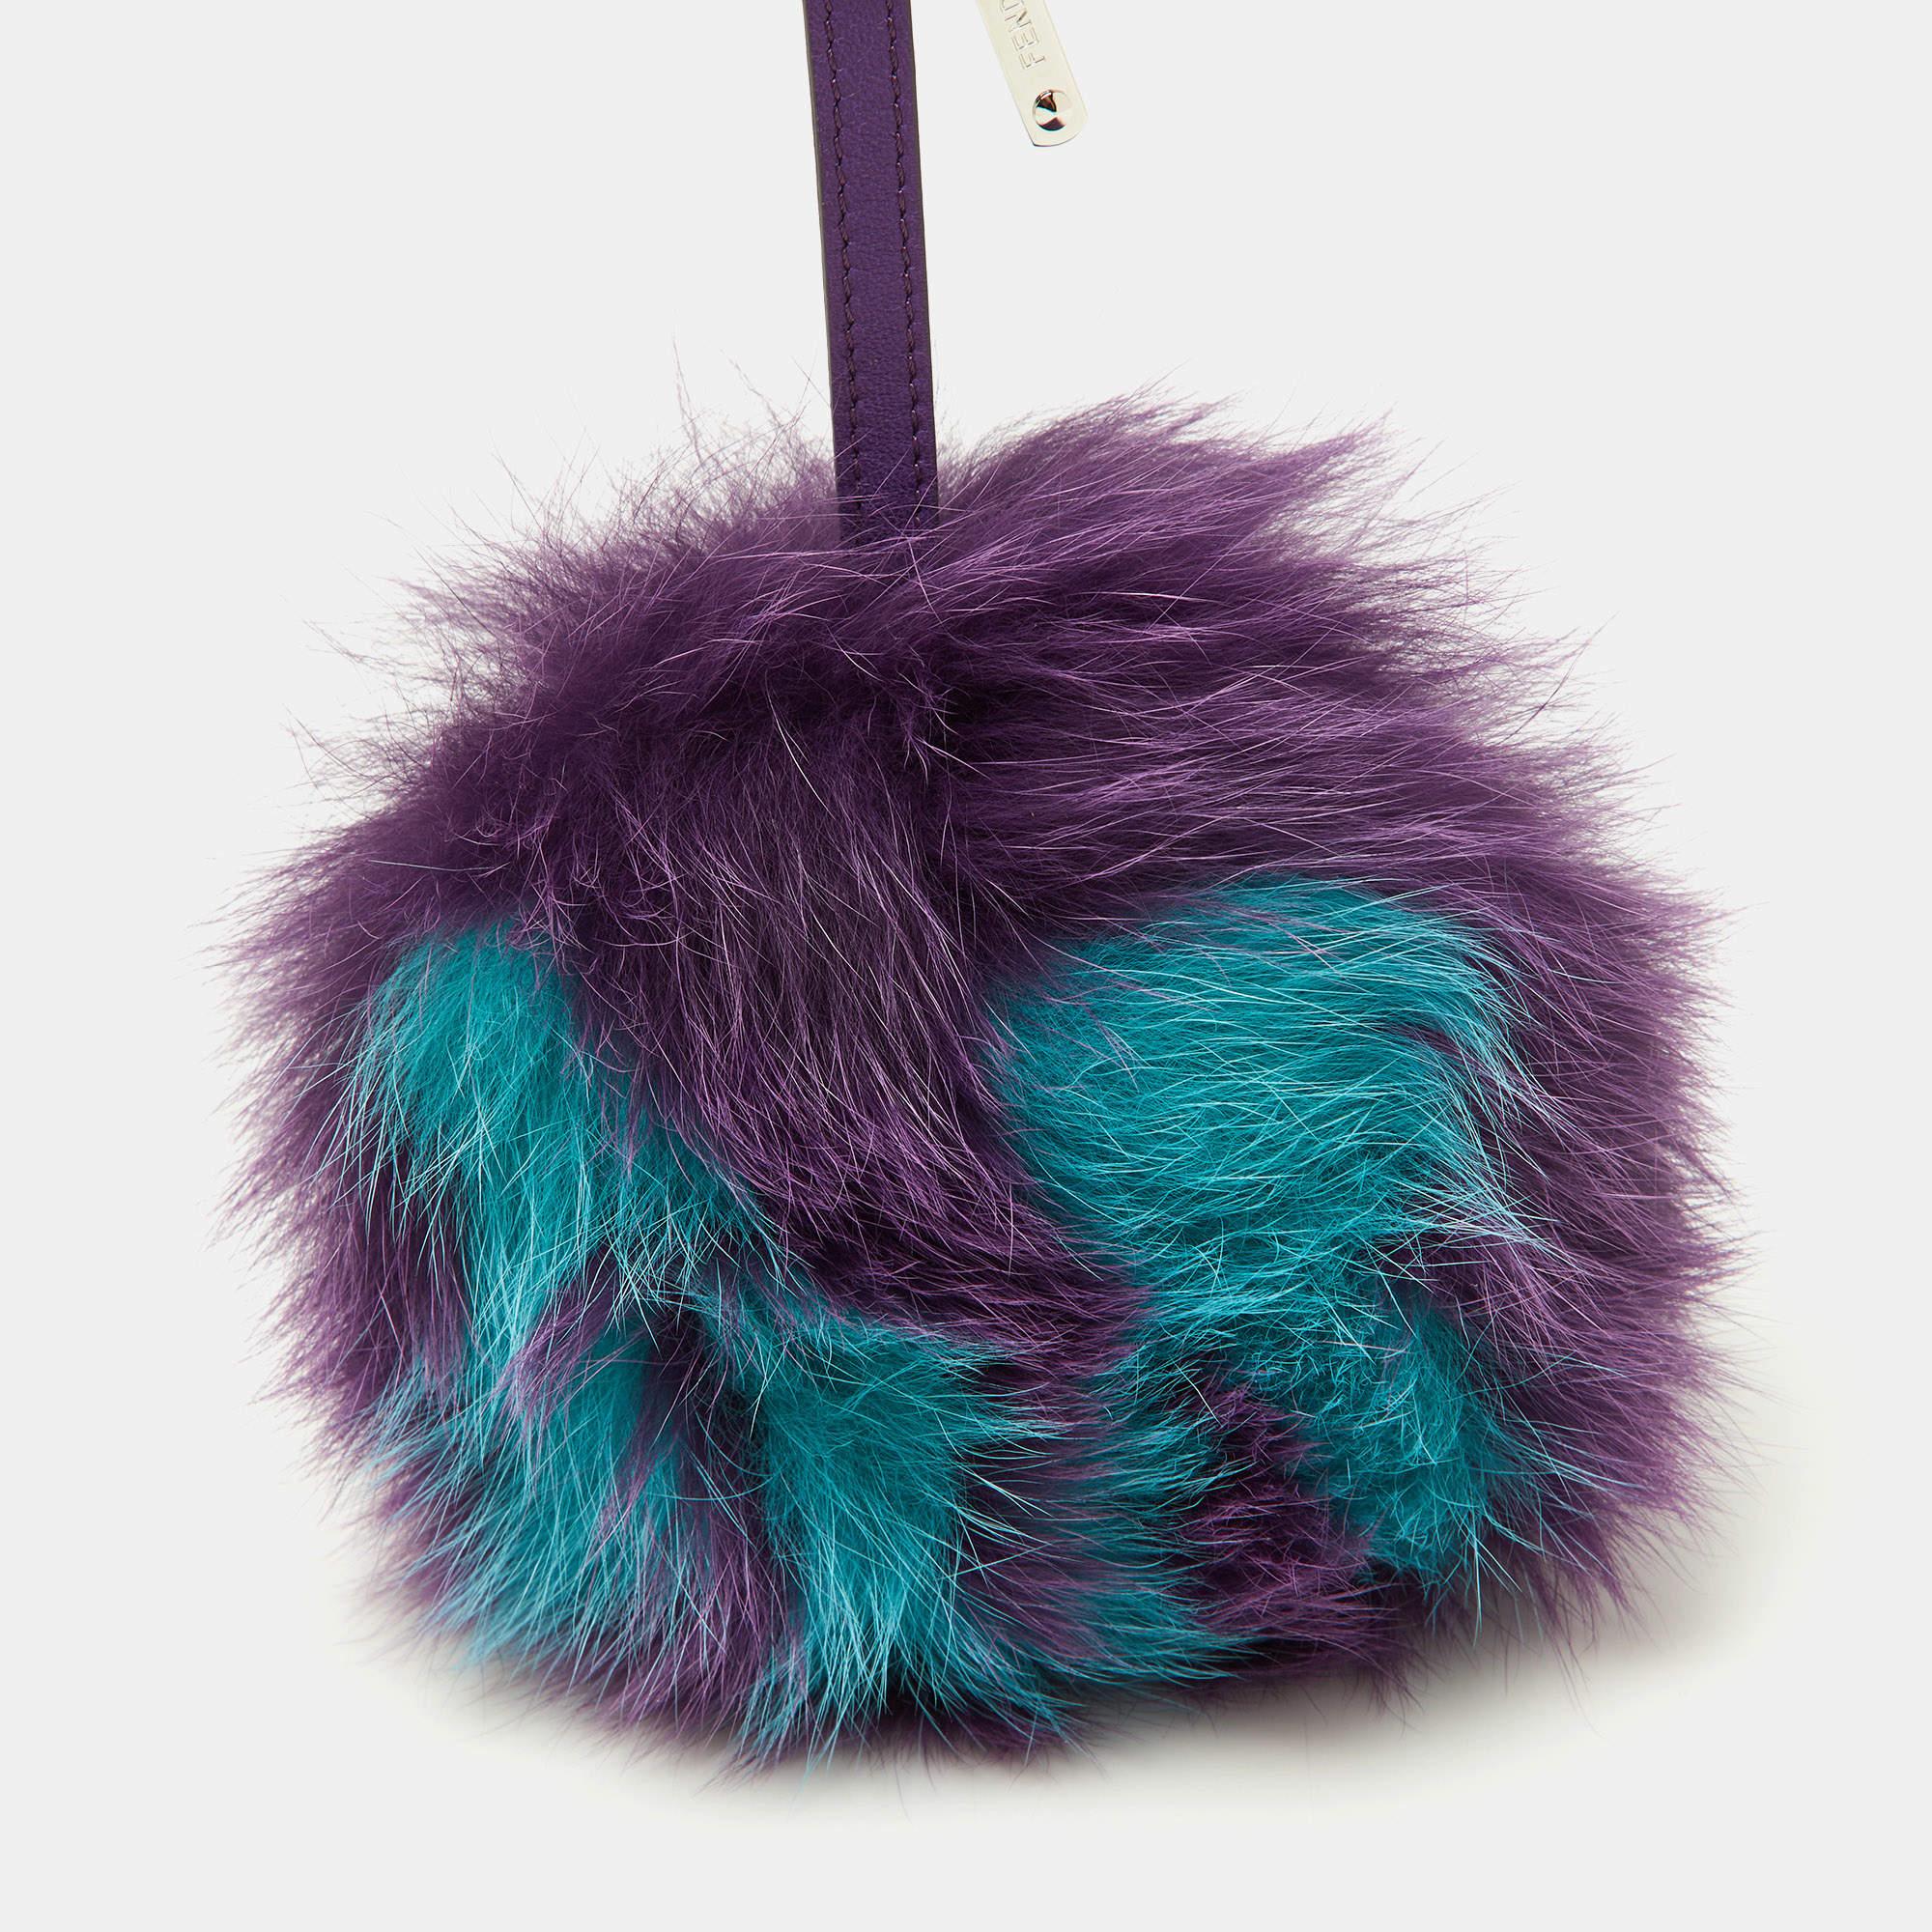 Fendi Purple/Blue Fox Fur Pom Pom Bag Charm In Excellent Condition For Sale In Dubai, Al Qouz 2